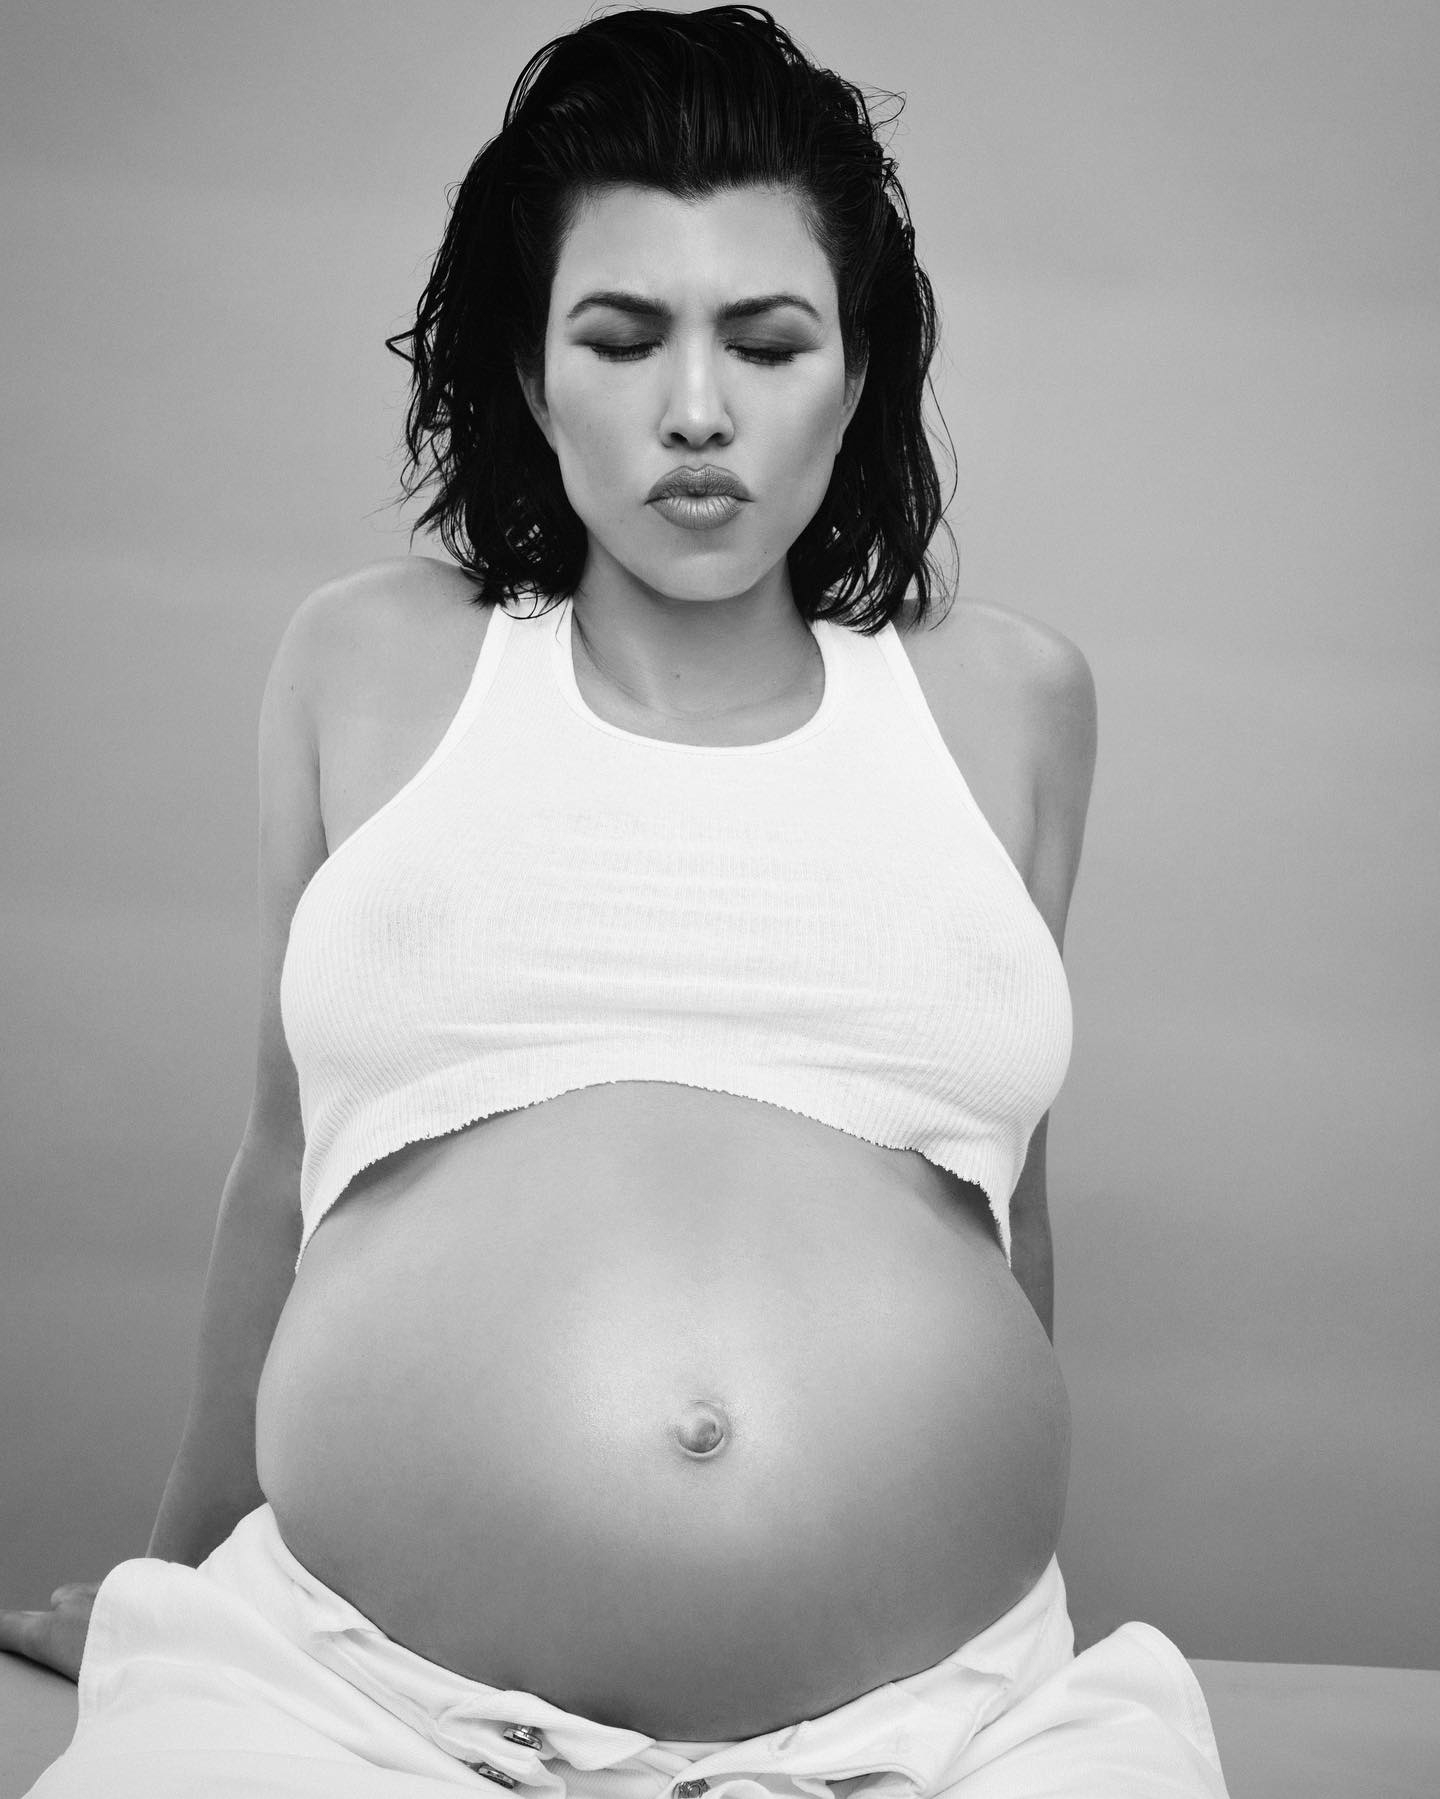 The Kardashian's pregnancy journey wasn't the easiest